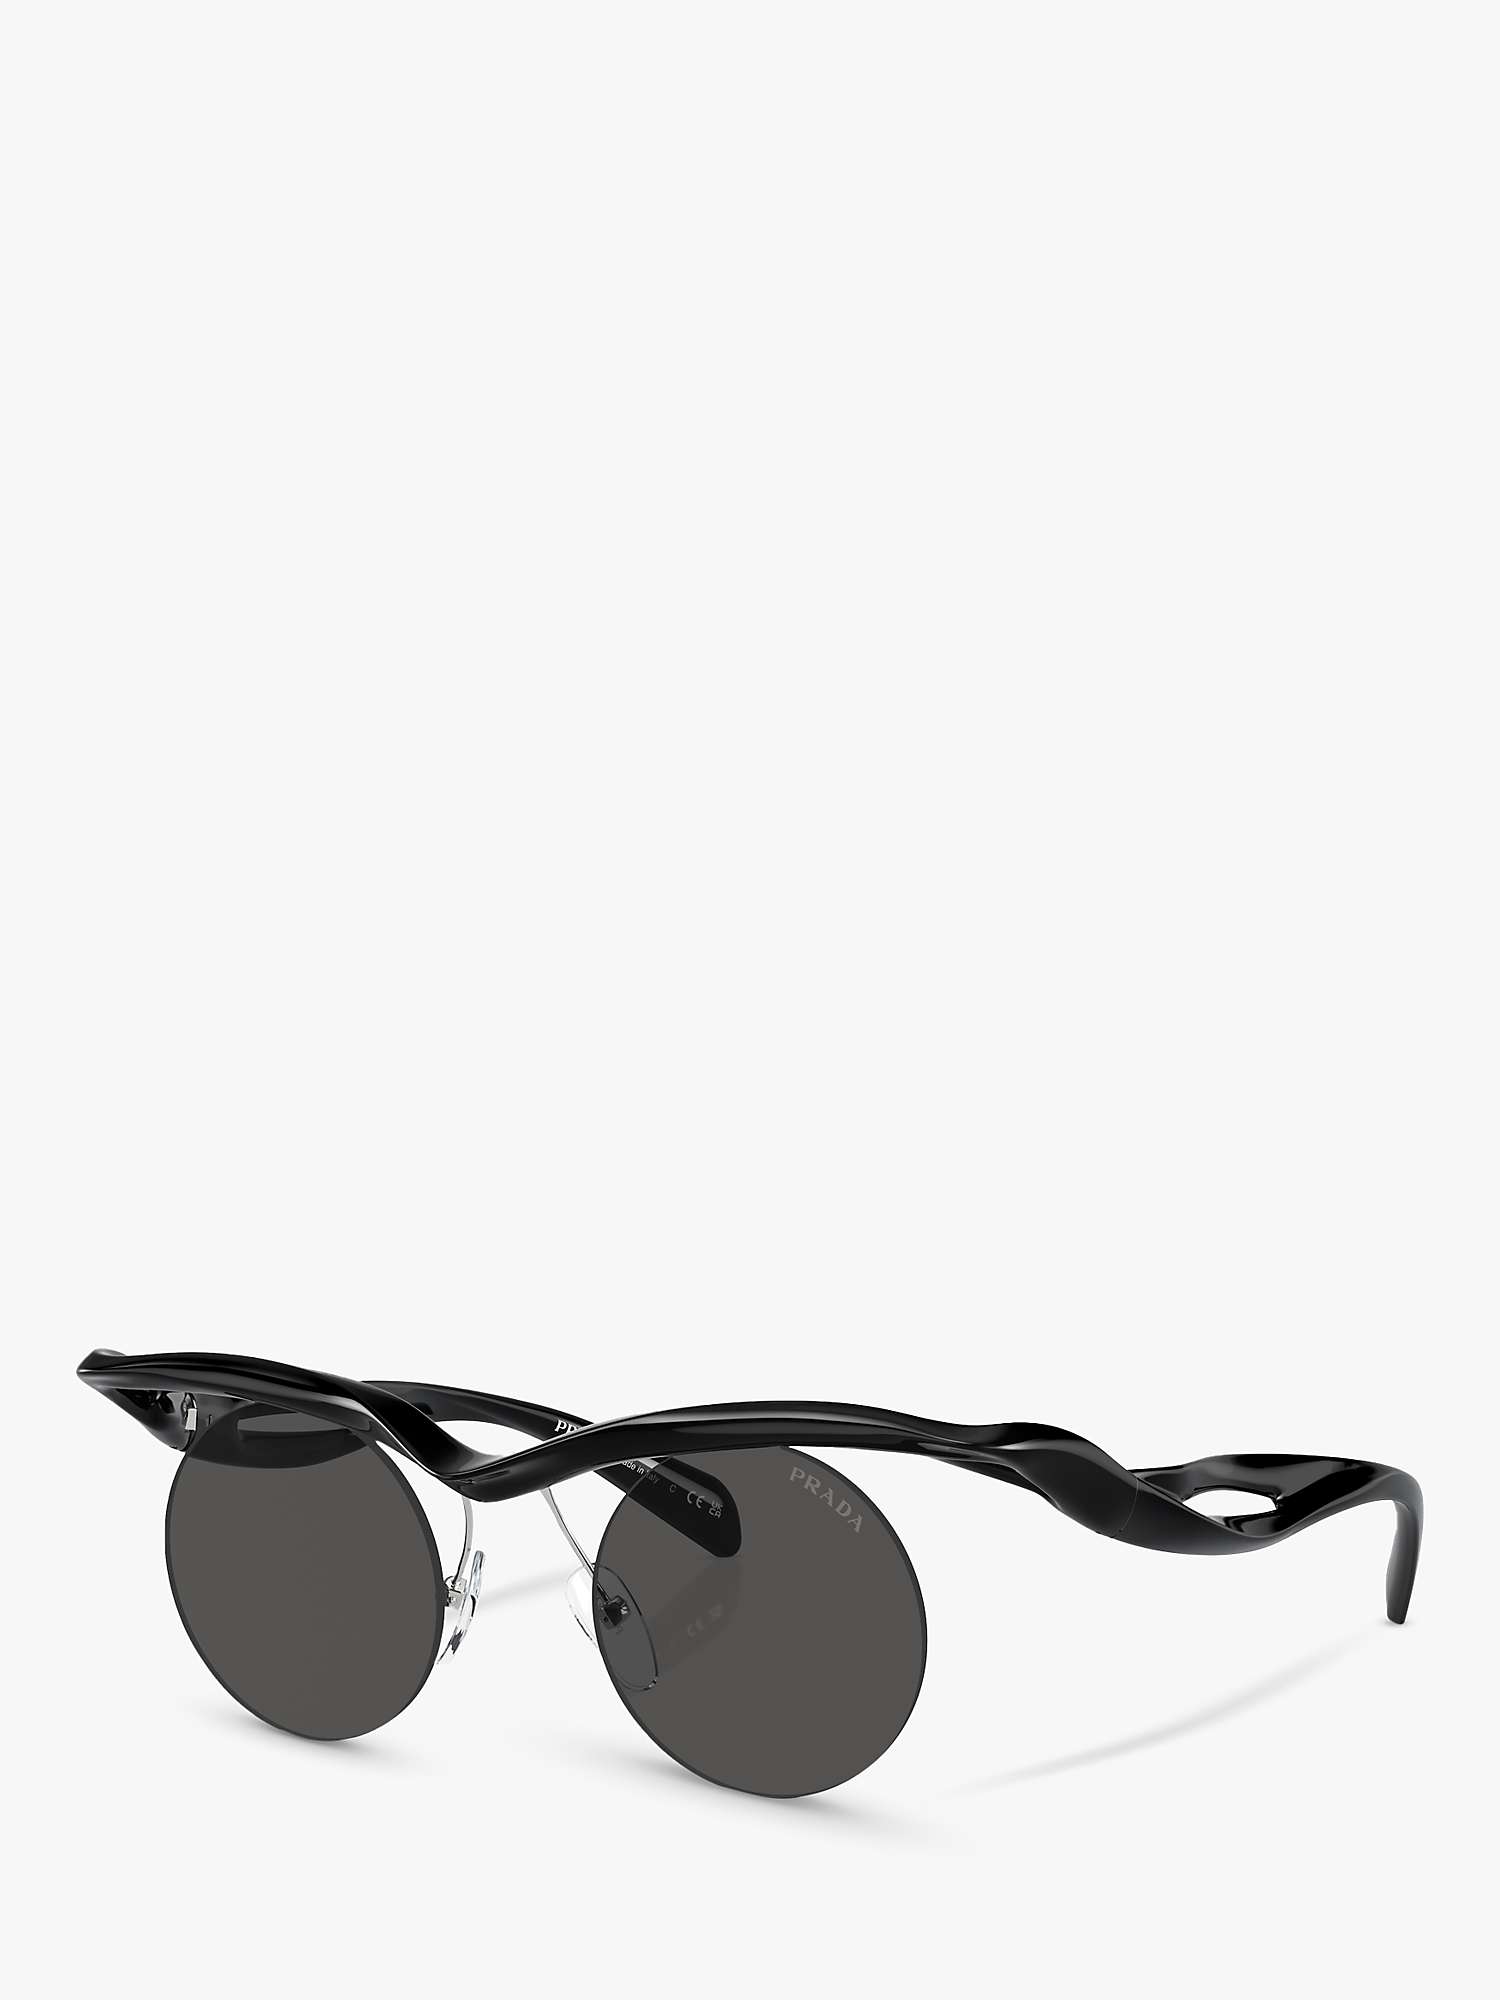 Buy Prada PR A24S Women's Round Sunglasses, Black Online at johnlewis.com